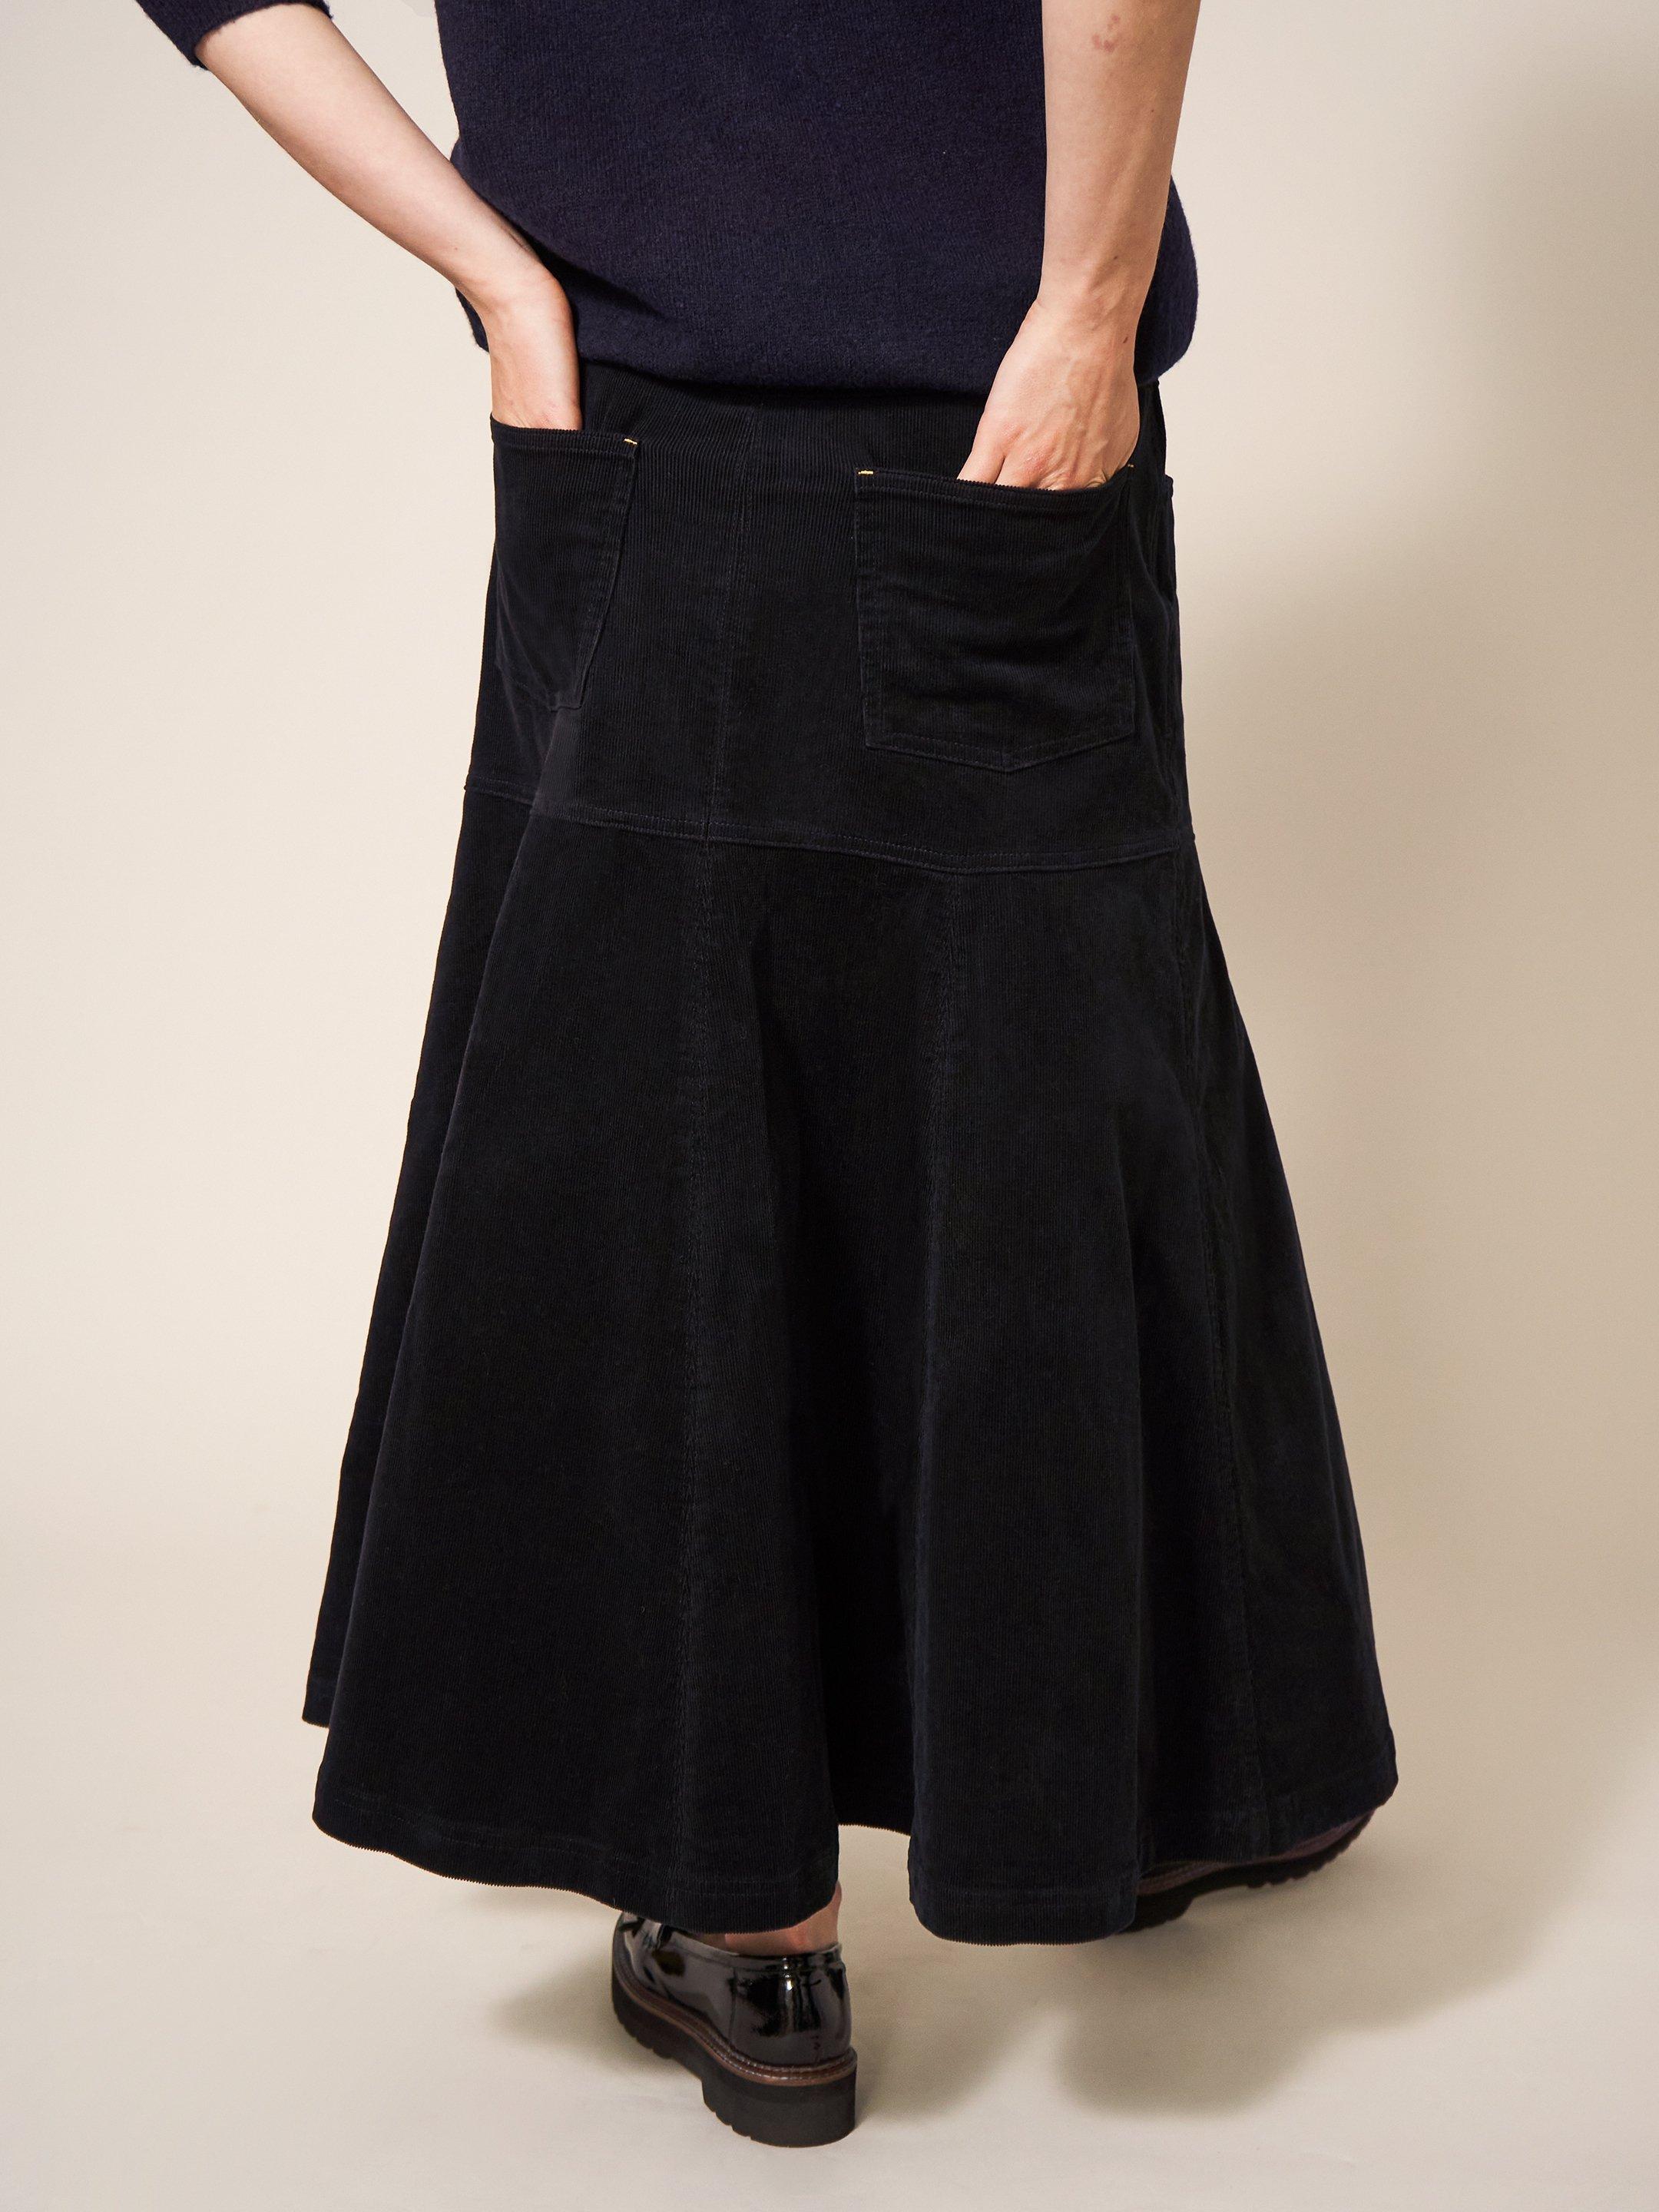 Quinn Organic Cord Skirt in PURE BLK - MODEL BACK